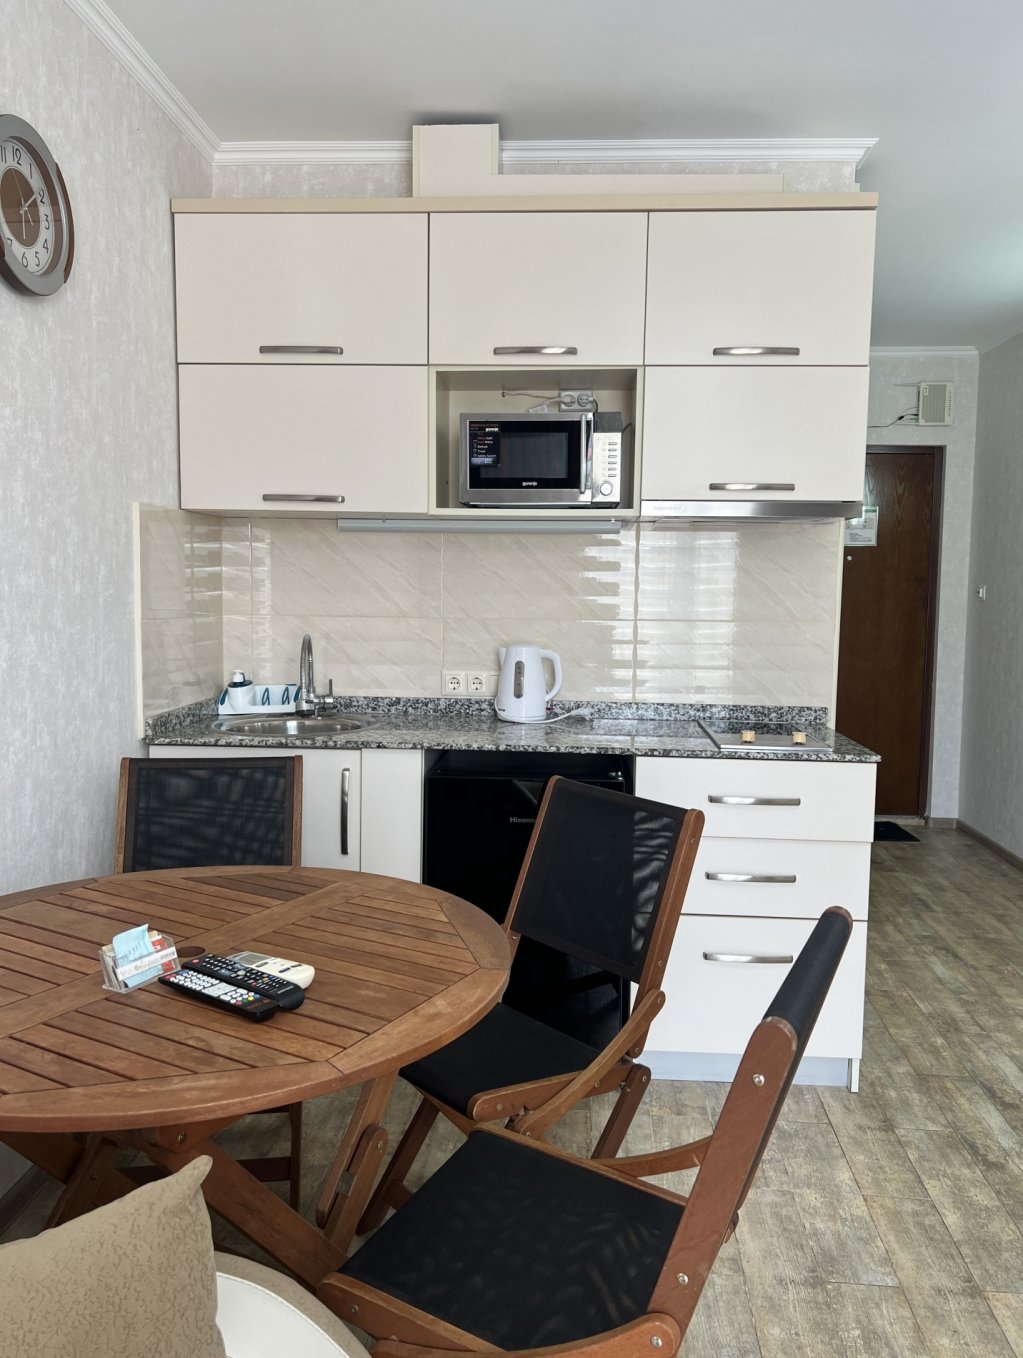 1-bedroom apartment near the sea id-1098 -  rent an apartment in Batumi